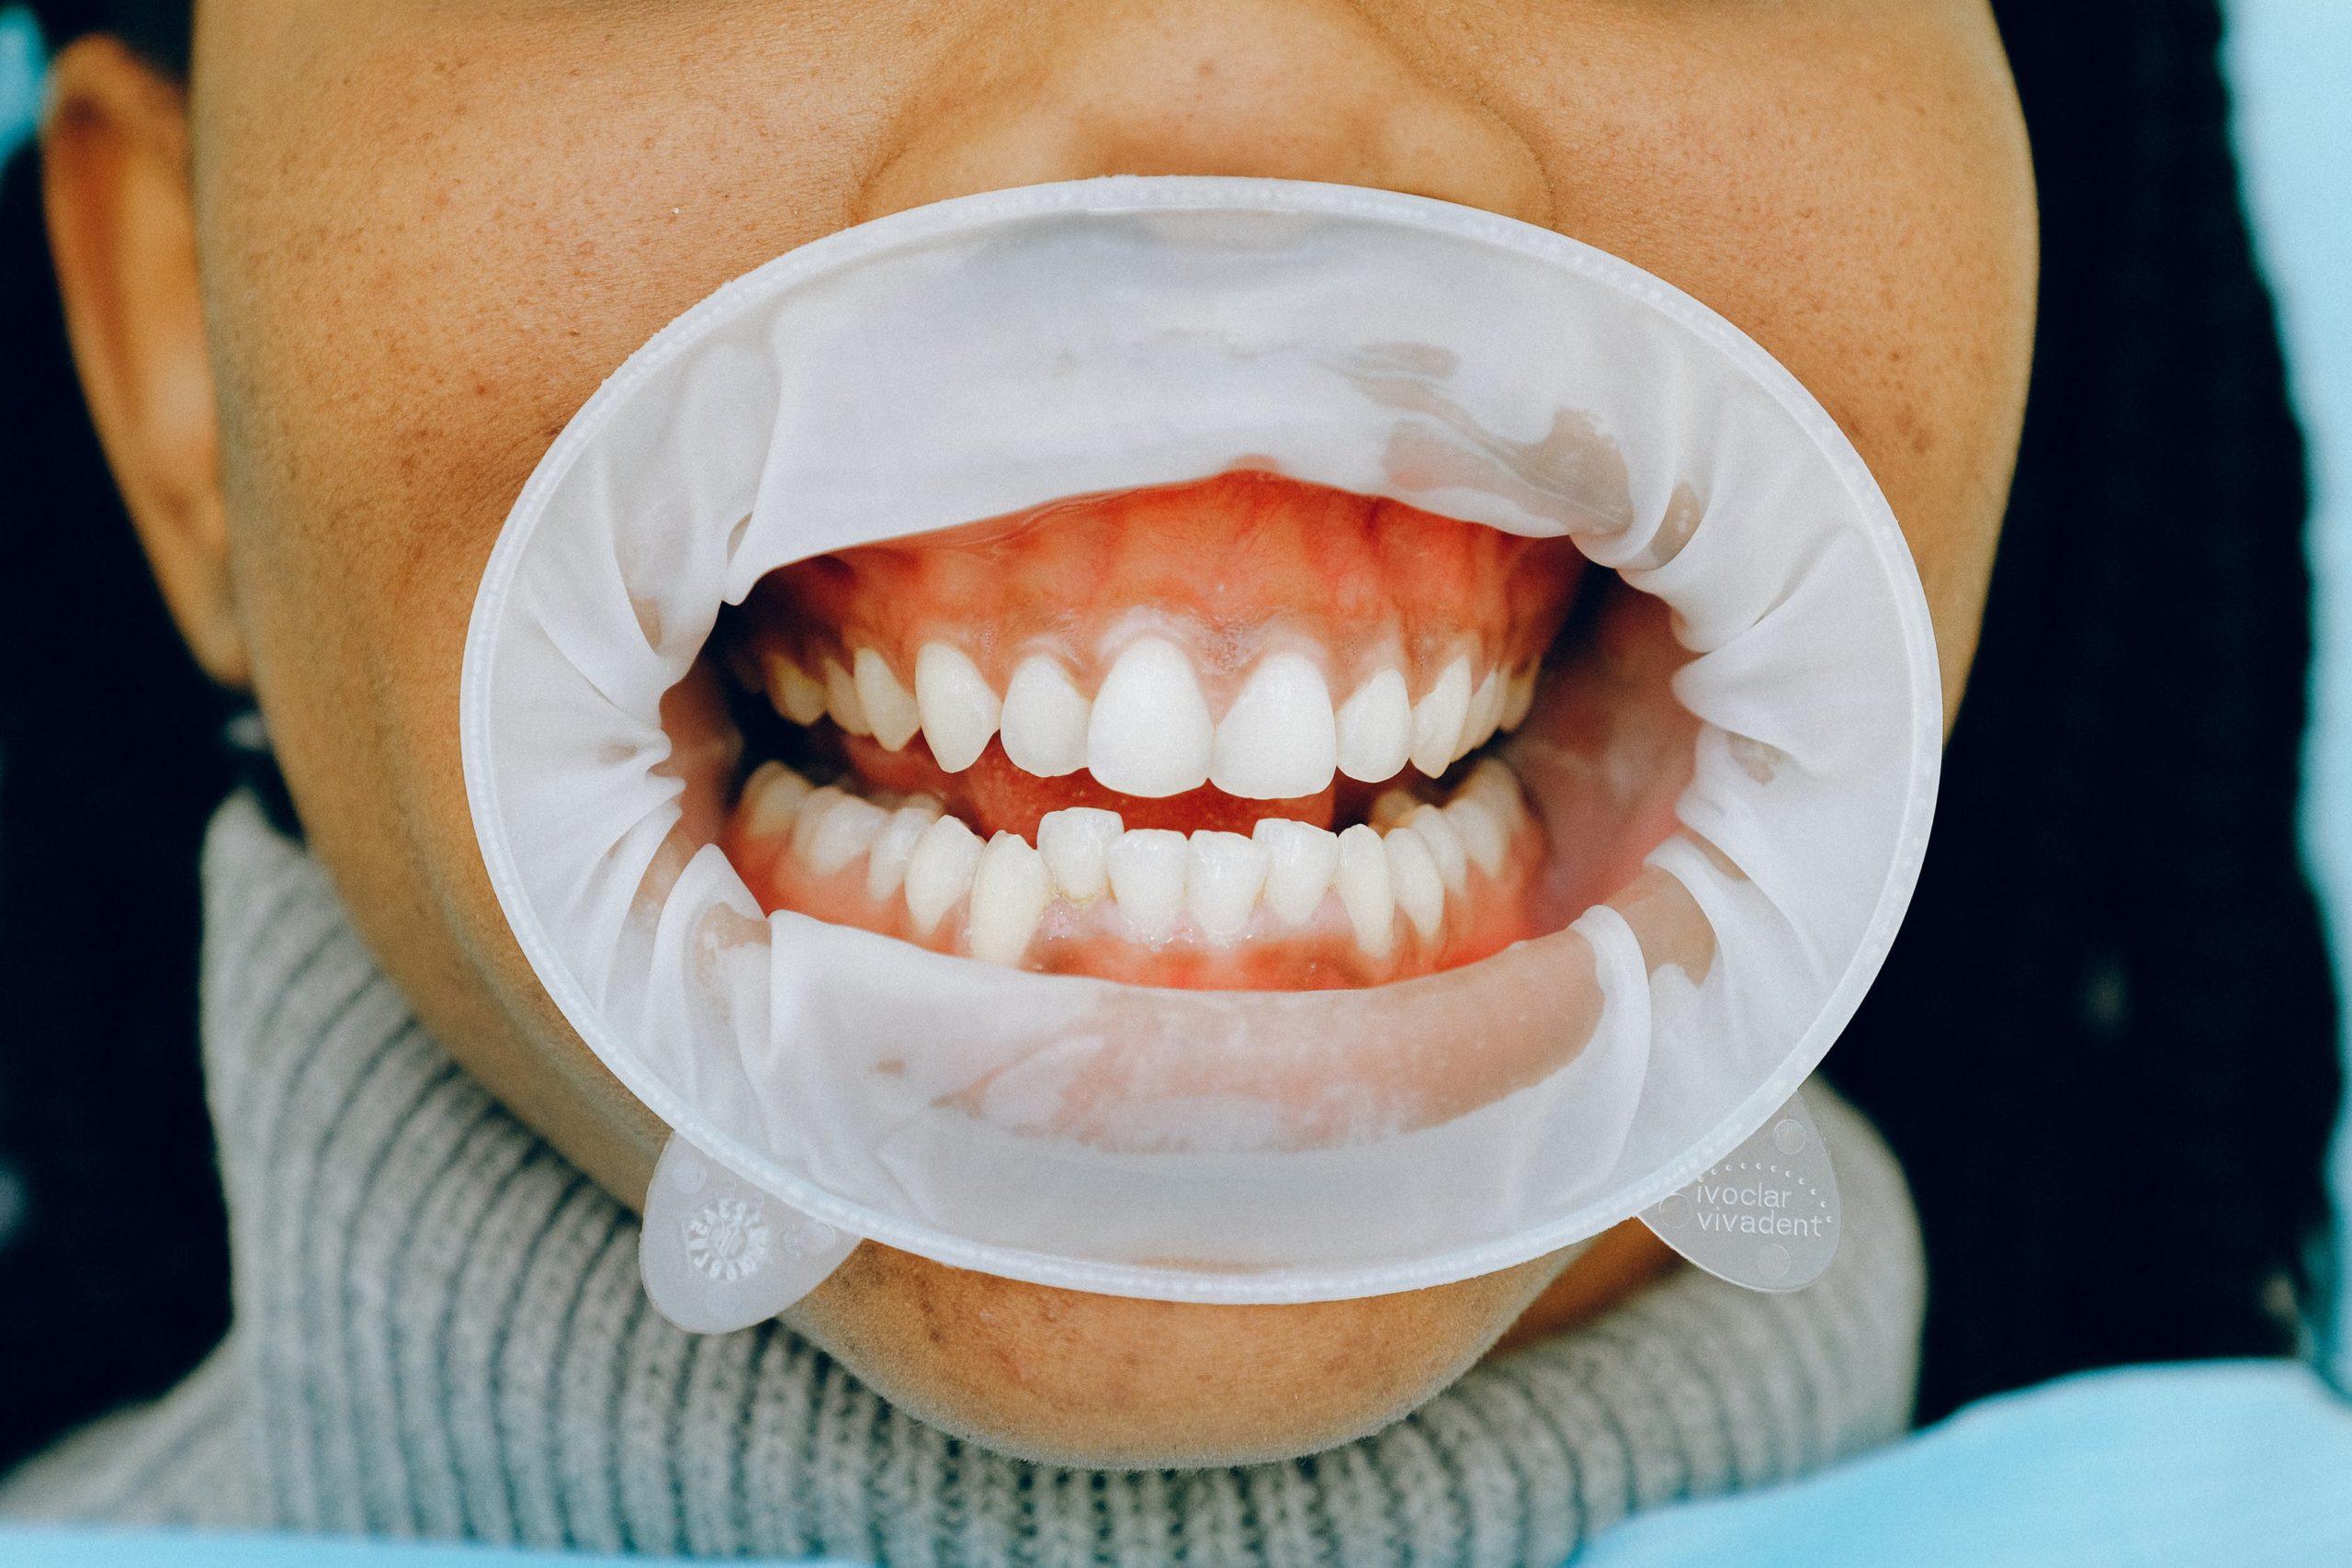 How to Prevent Gum Disease